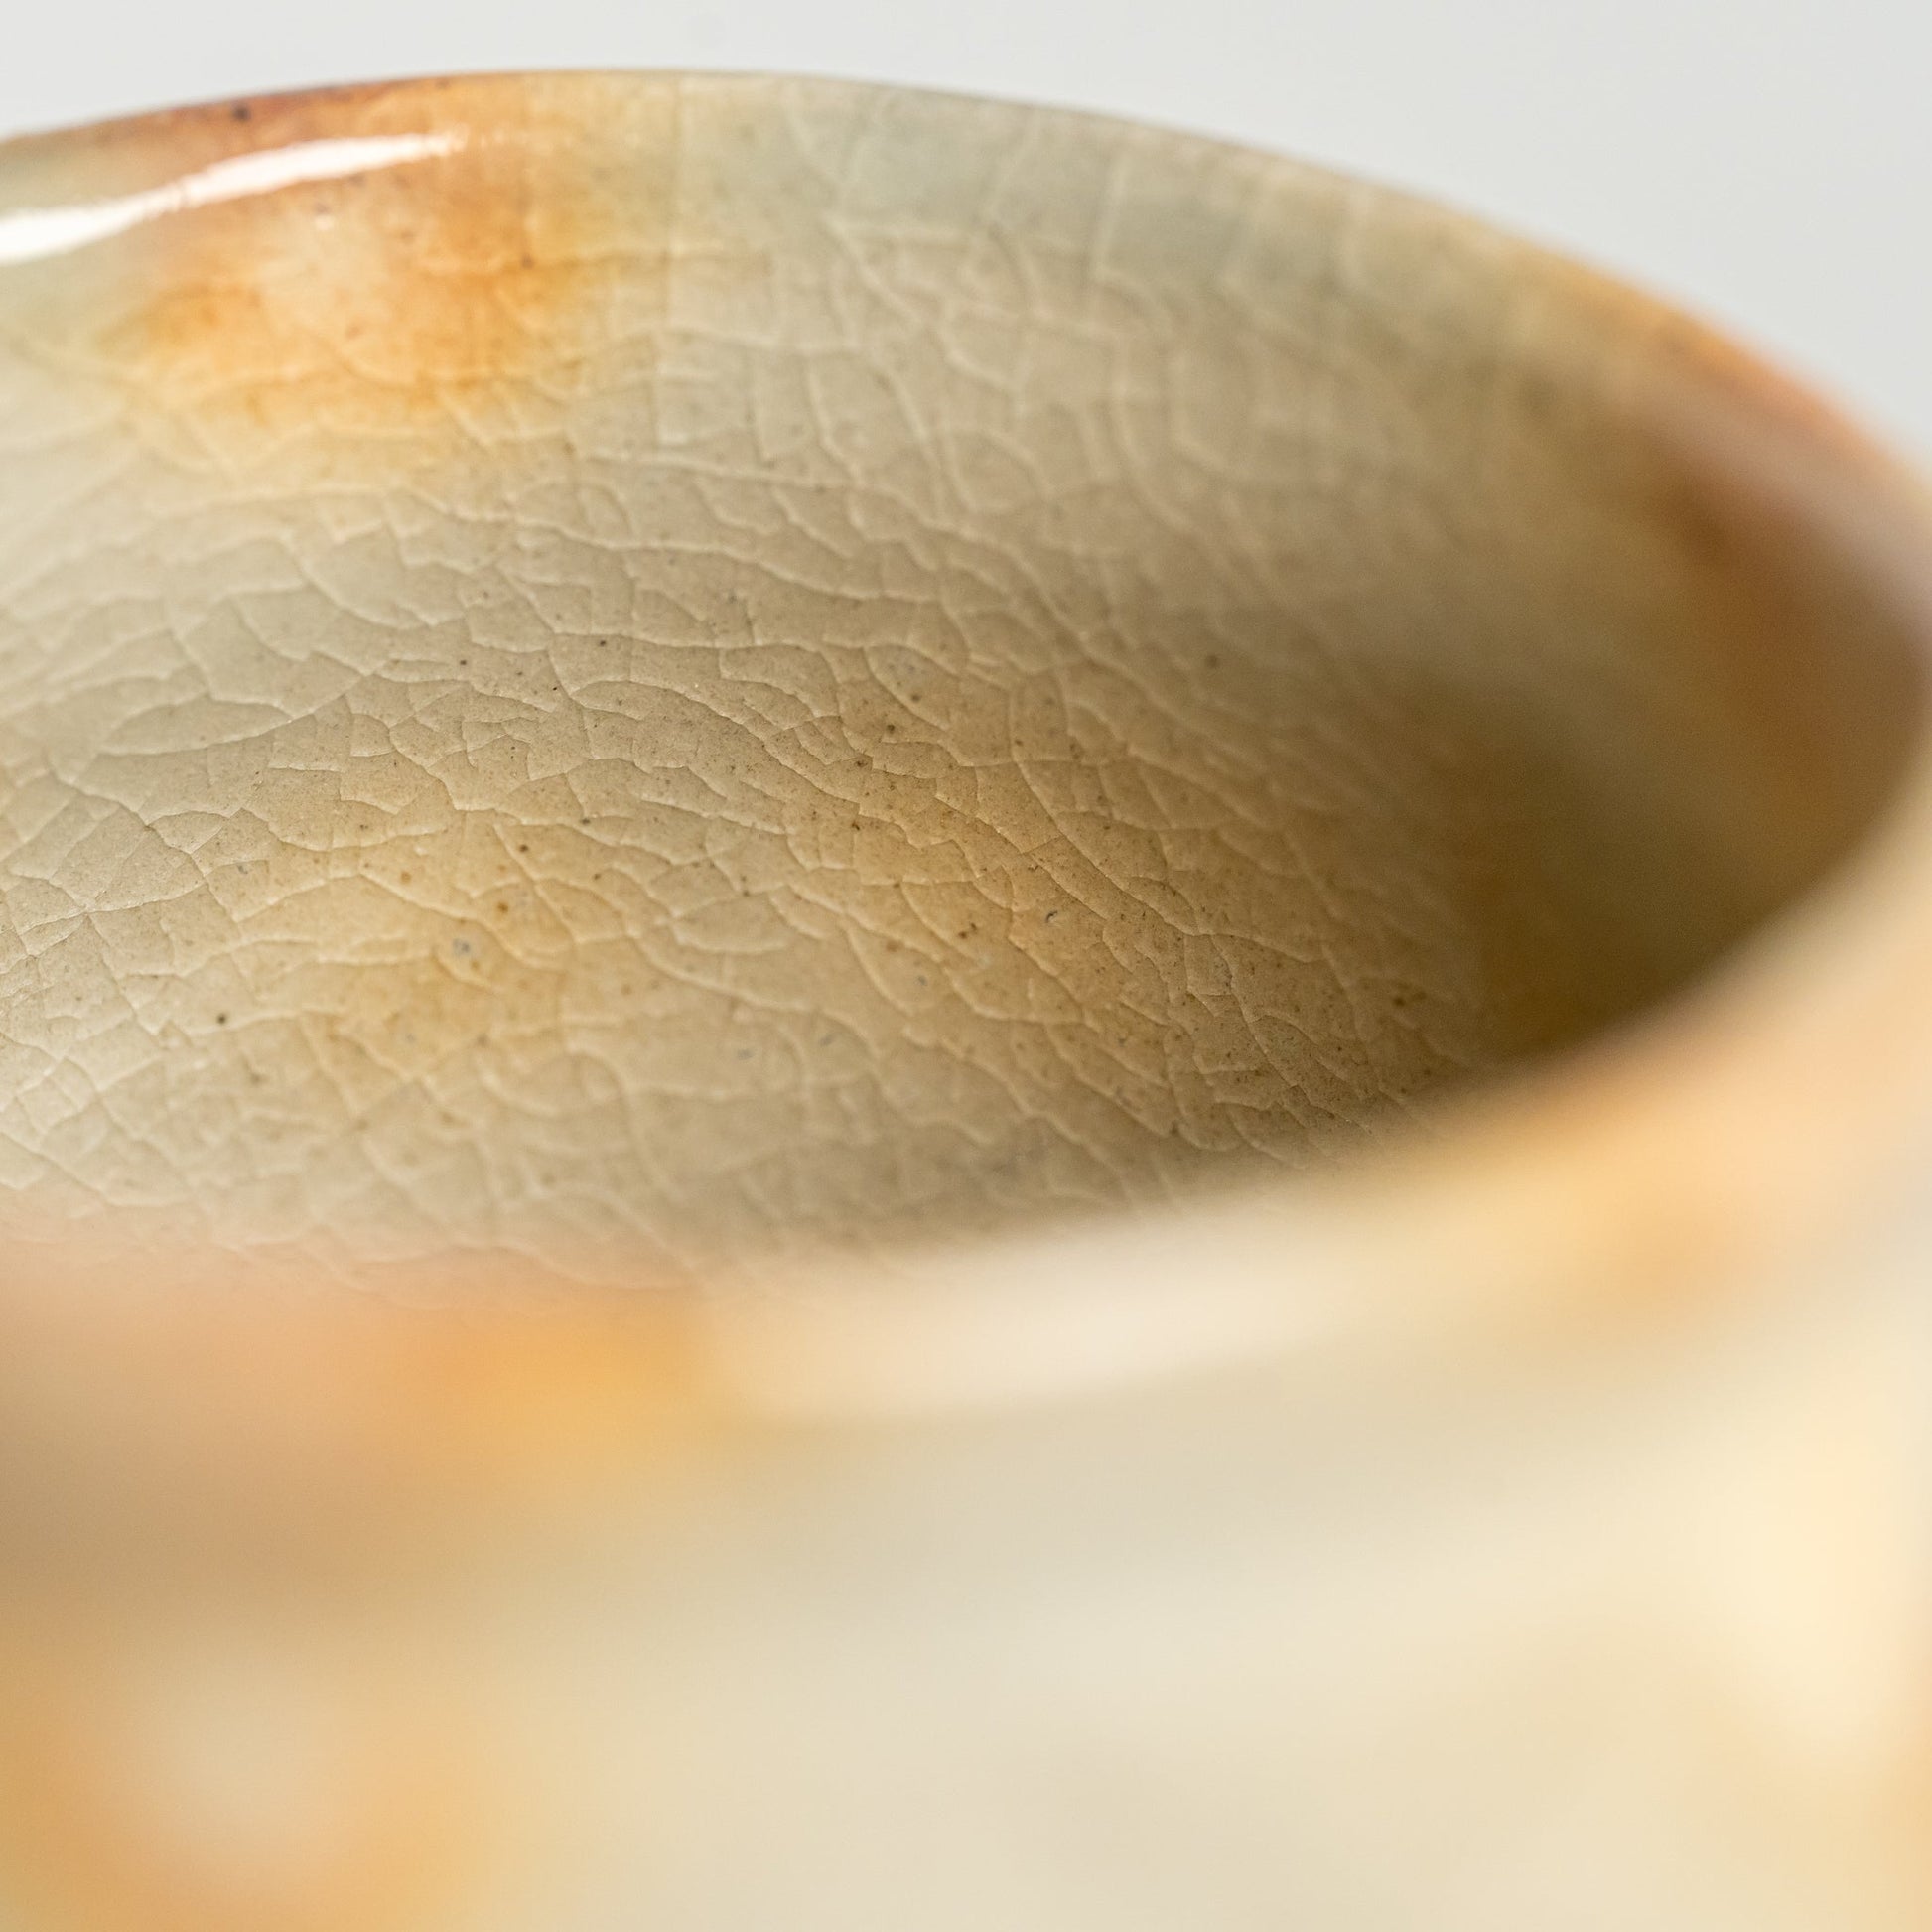 A close up of a kesho Hagi yaki teacup